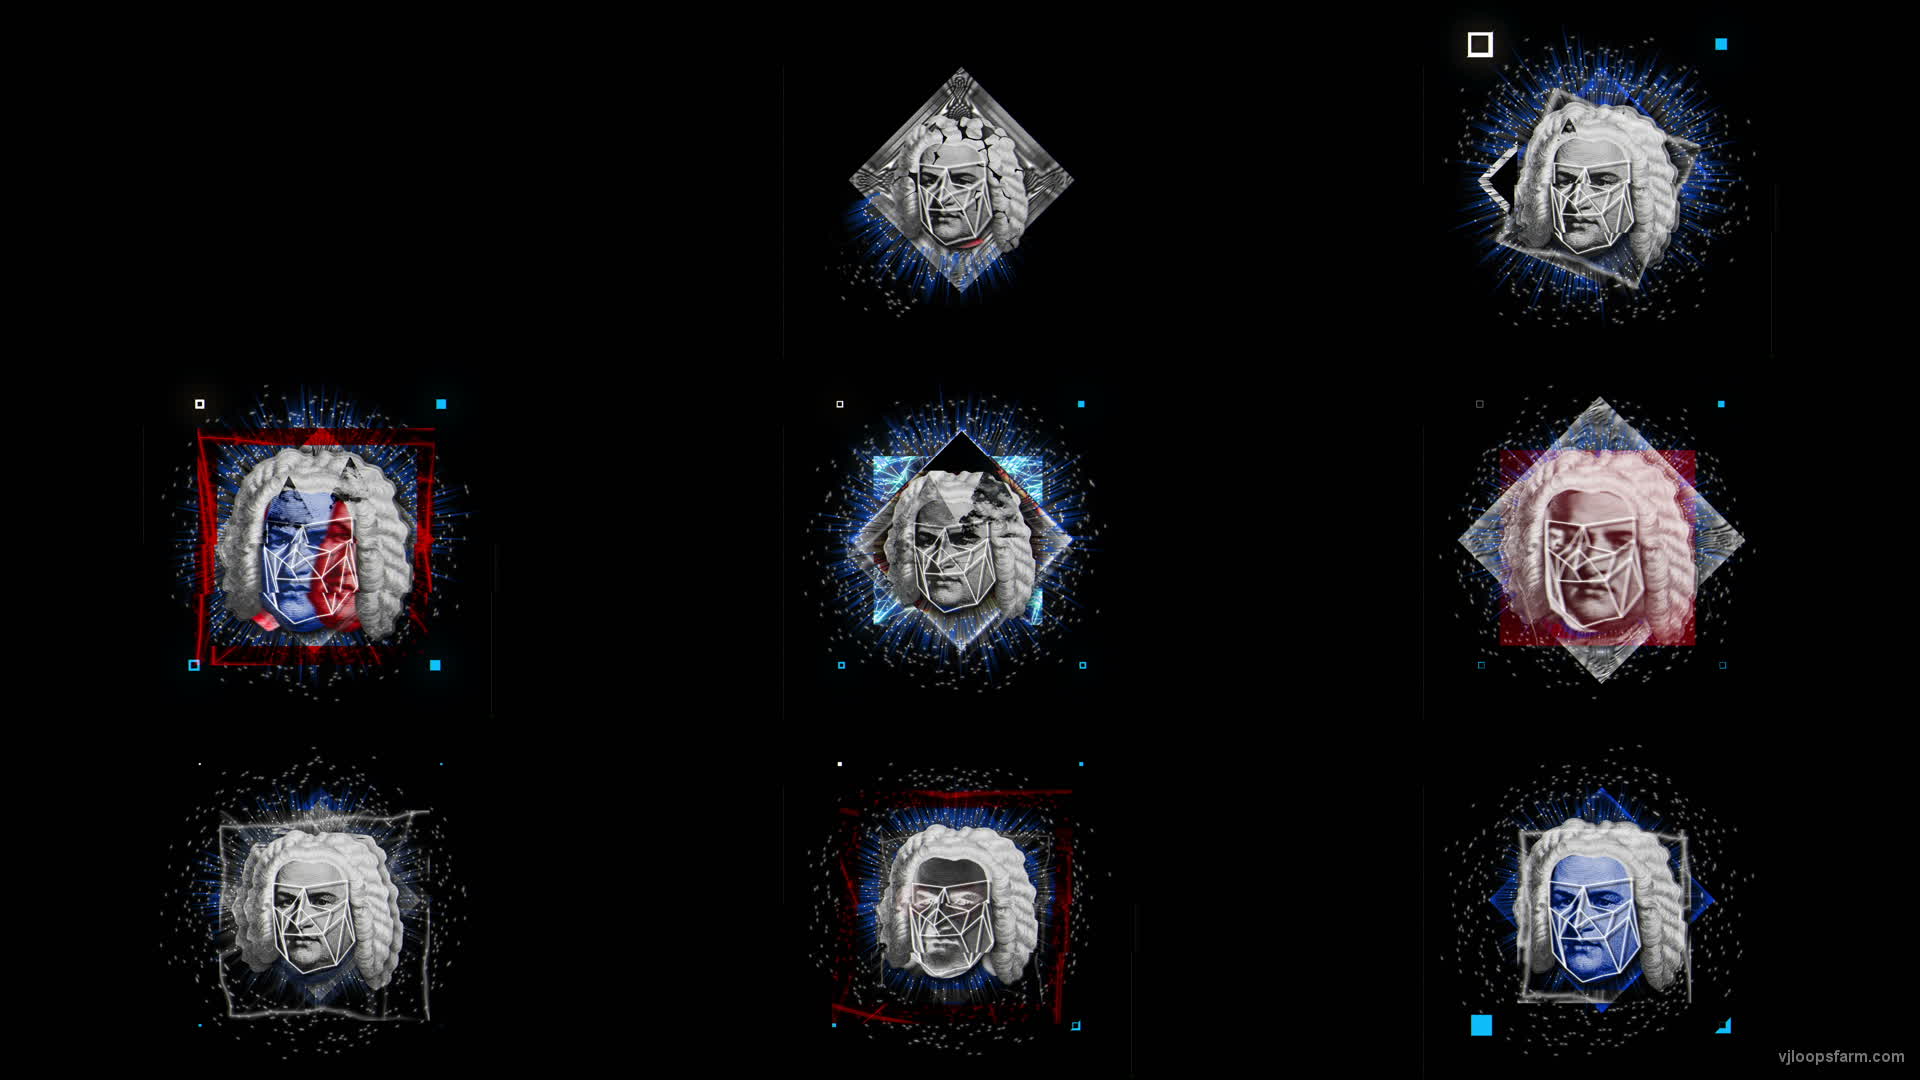 Blue Sebastian Bach Face mask motion graphics vj dj art vj loop